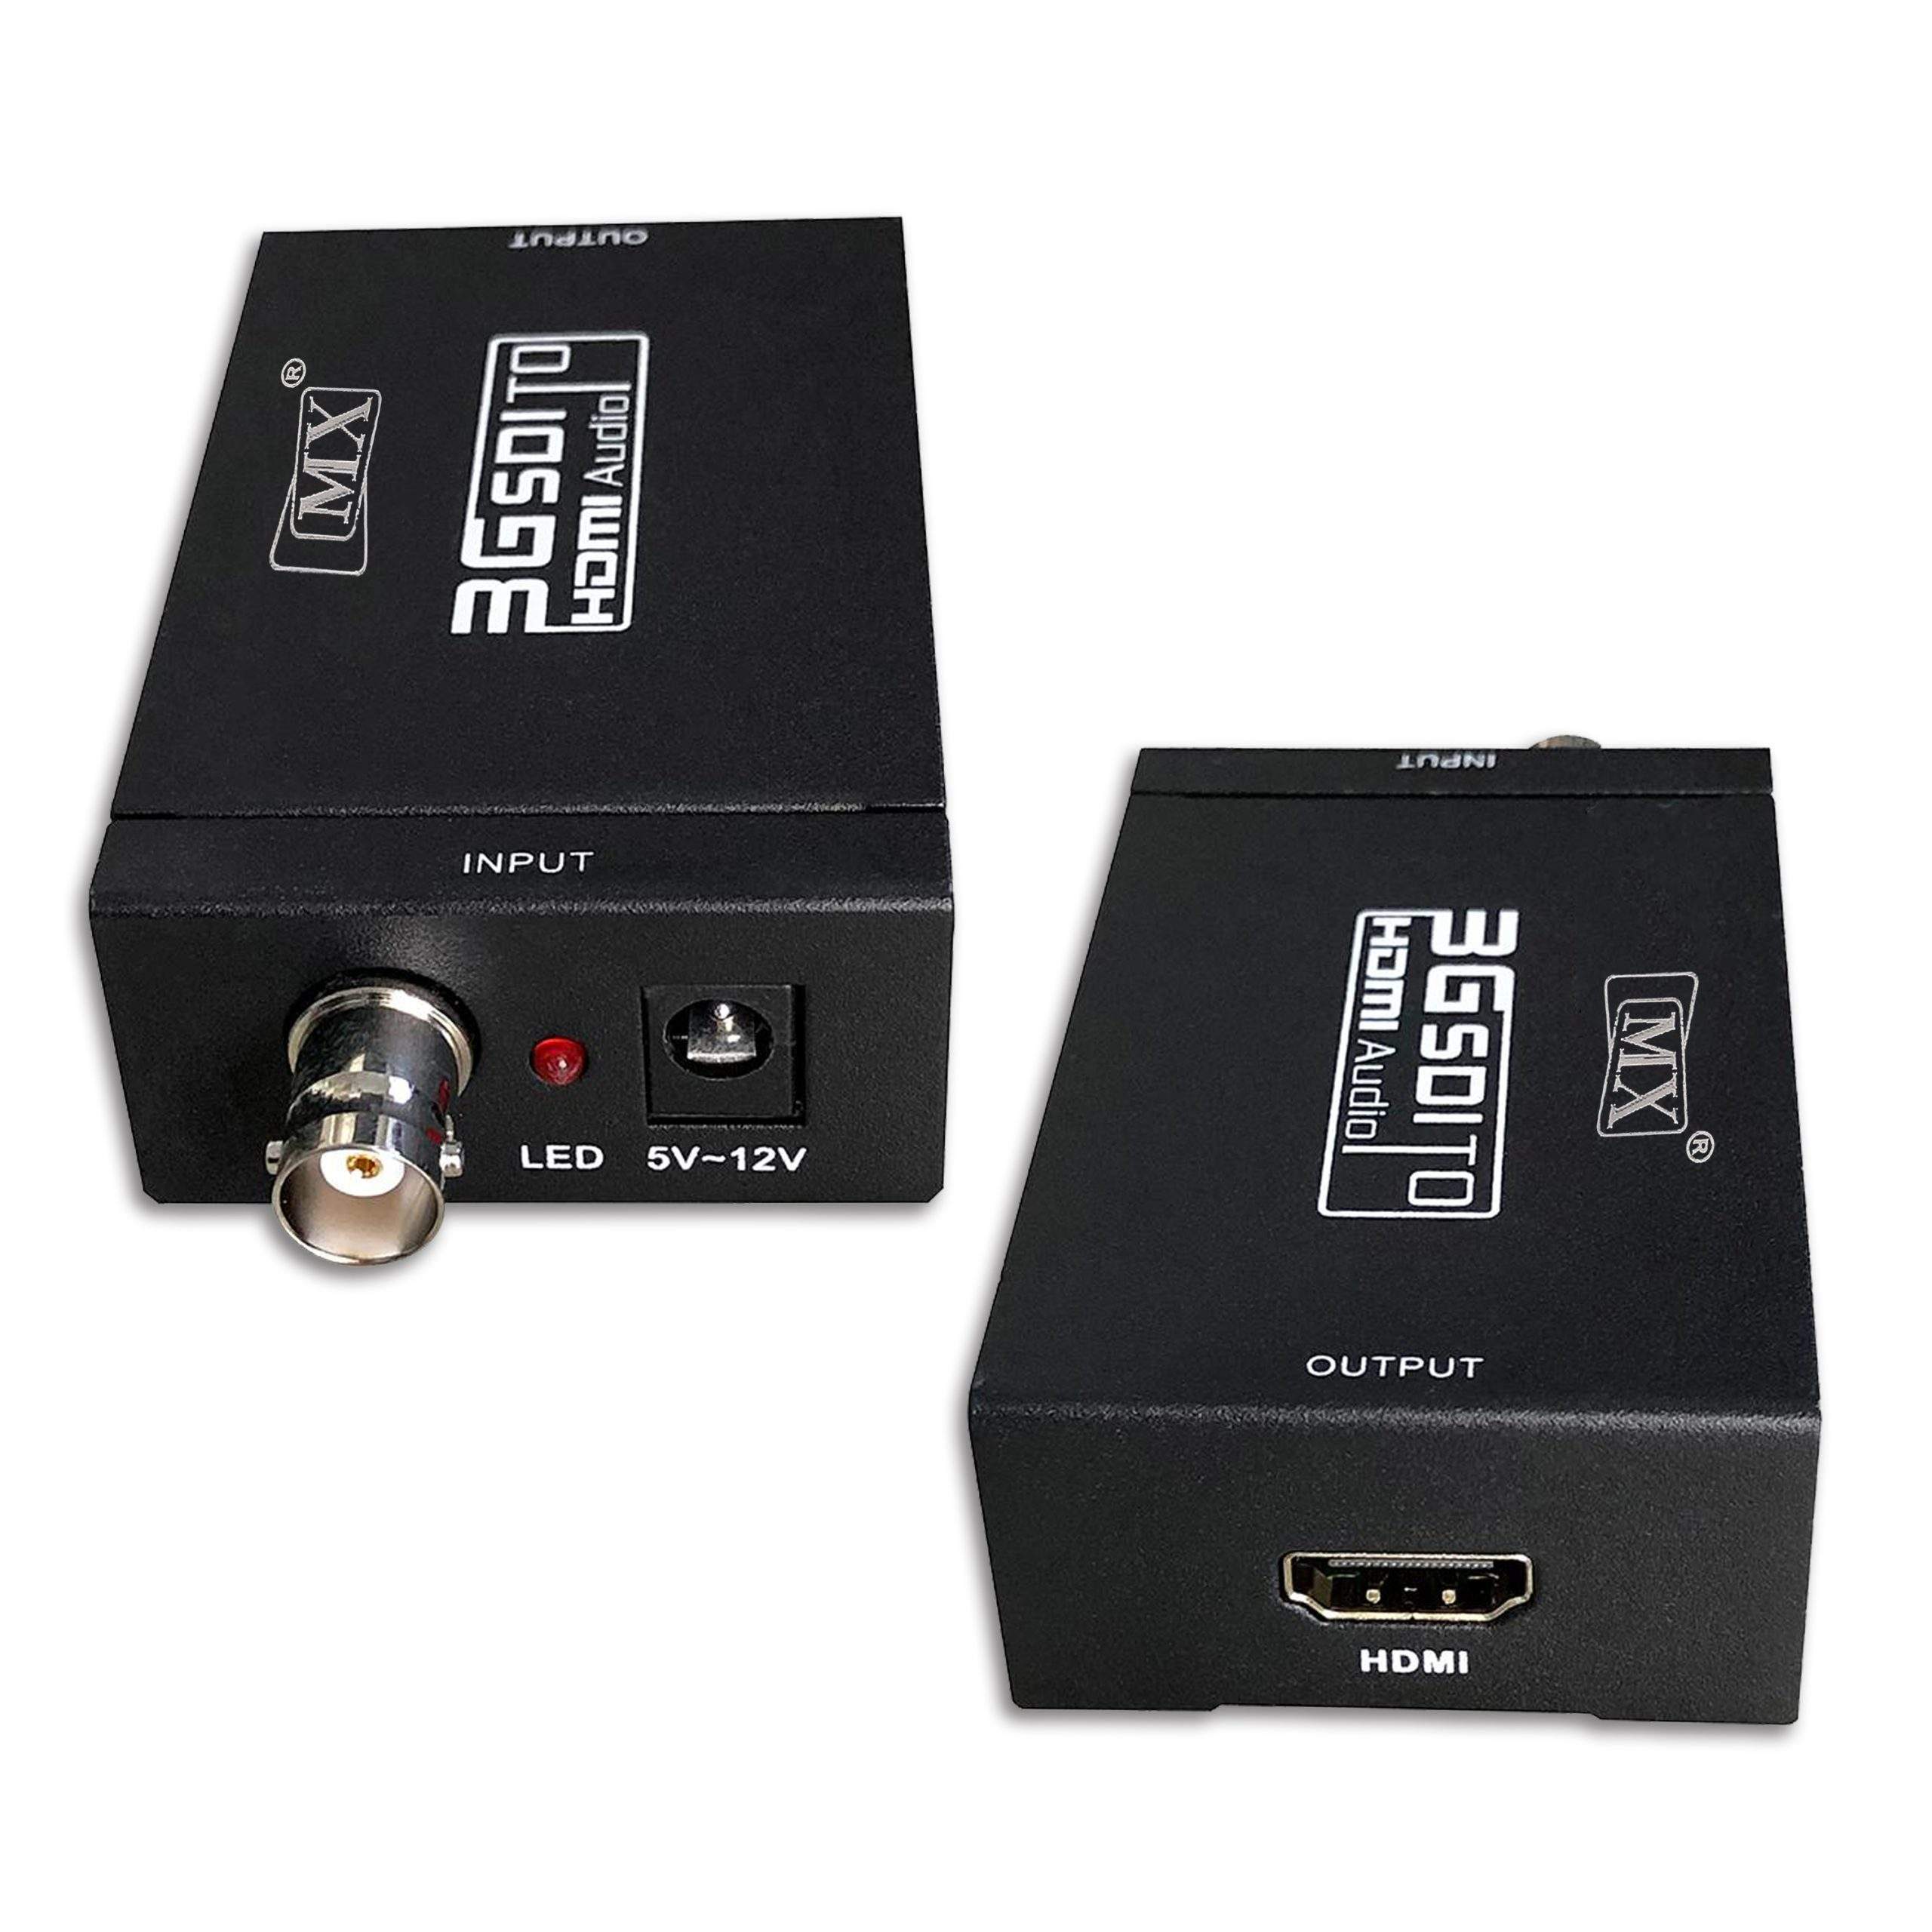 MX SDI to HDMI Converter Audio Video SDI Converter Adapter 3G-SDI, SD-SDI for SDI Camera, CCTV System, SDI Monitor, Other SDI Device Media Streaming Device (MX-3750A) – MX MDR TECHNOLOGIES